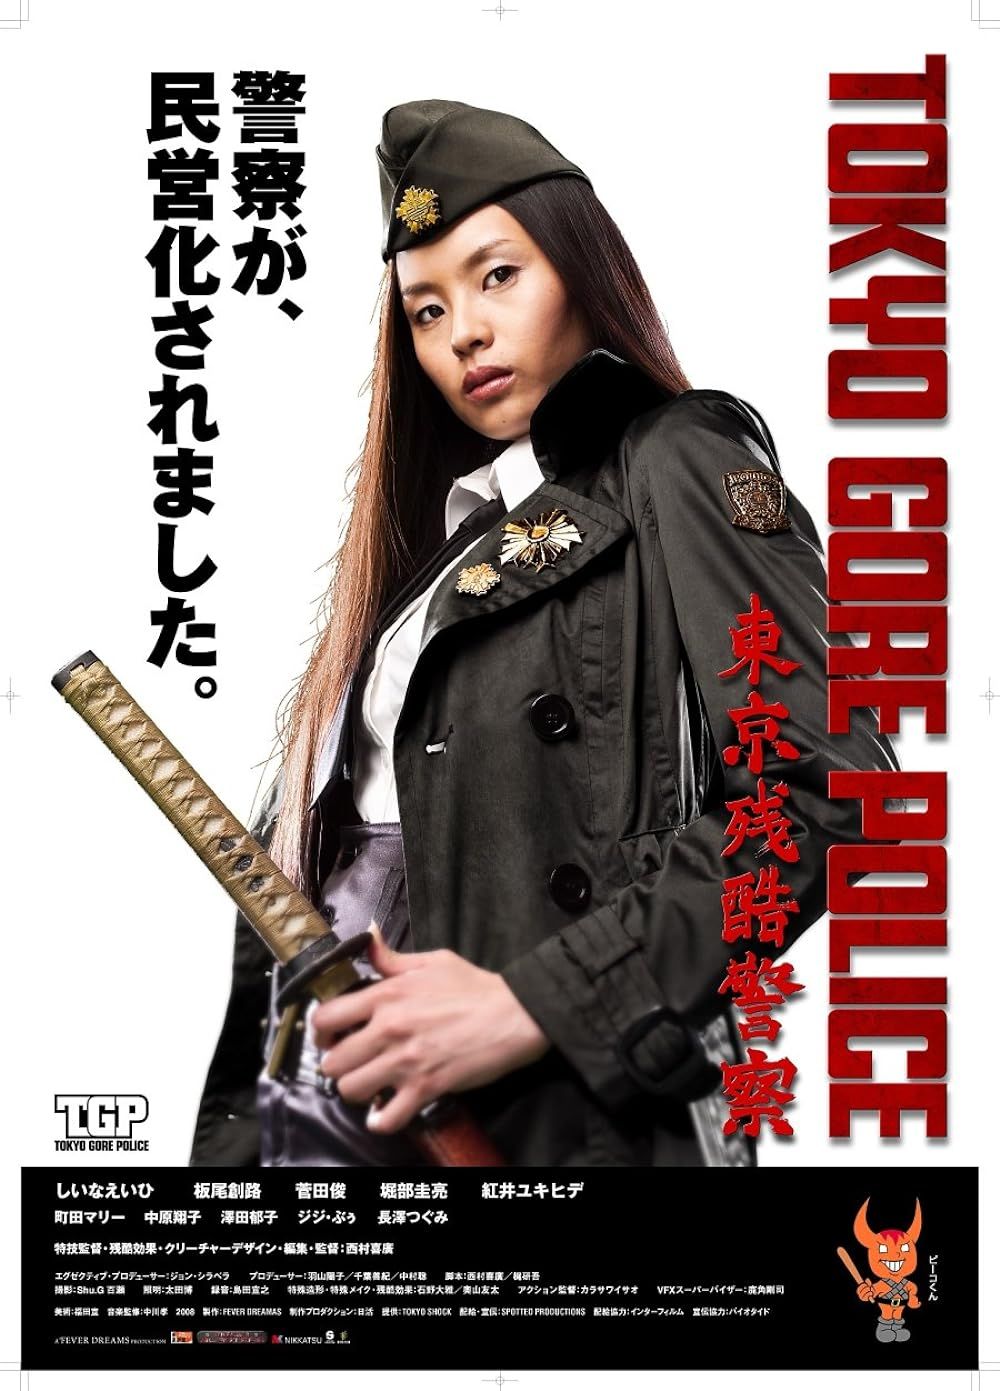 Eihi Shiina as Ruka in Tokyo Gore Police